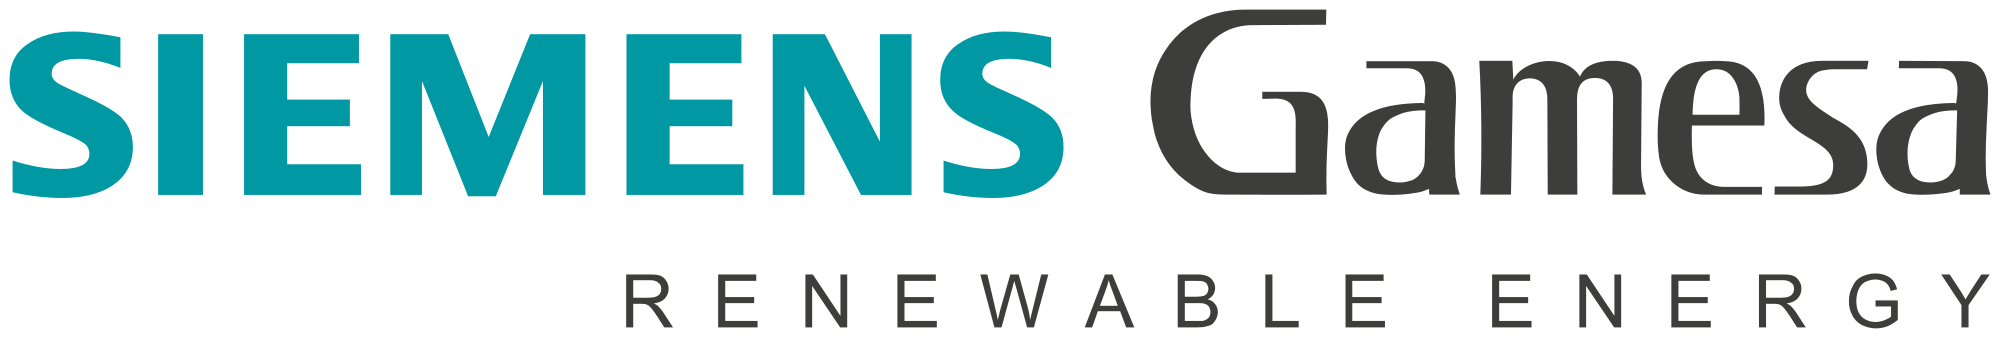 Siemens Energy Logo - Siemens Gamesa logo.svg